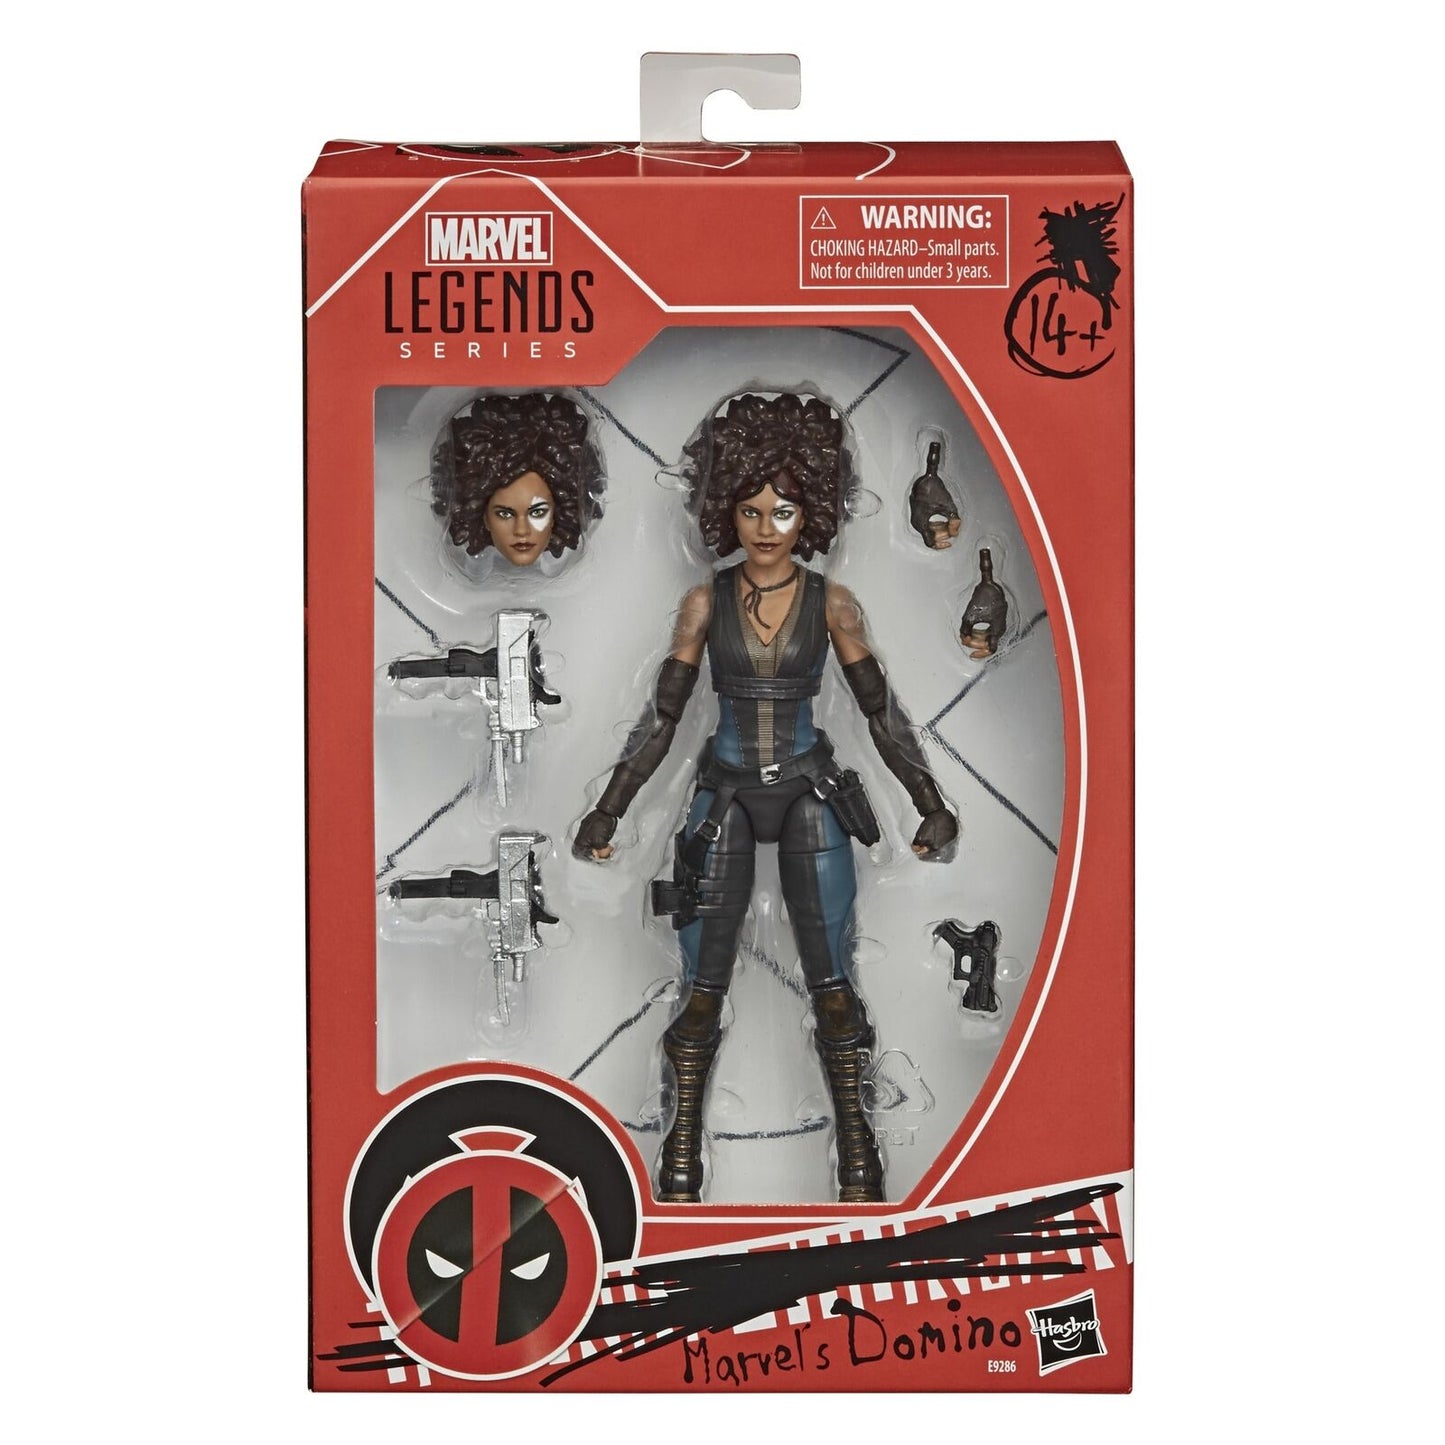 Hasbro Marvel Legends 6-inch Action Figure - Domino